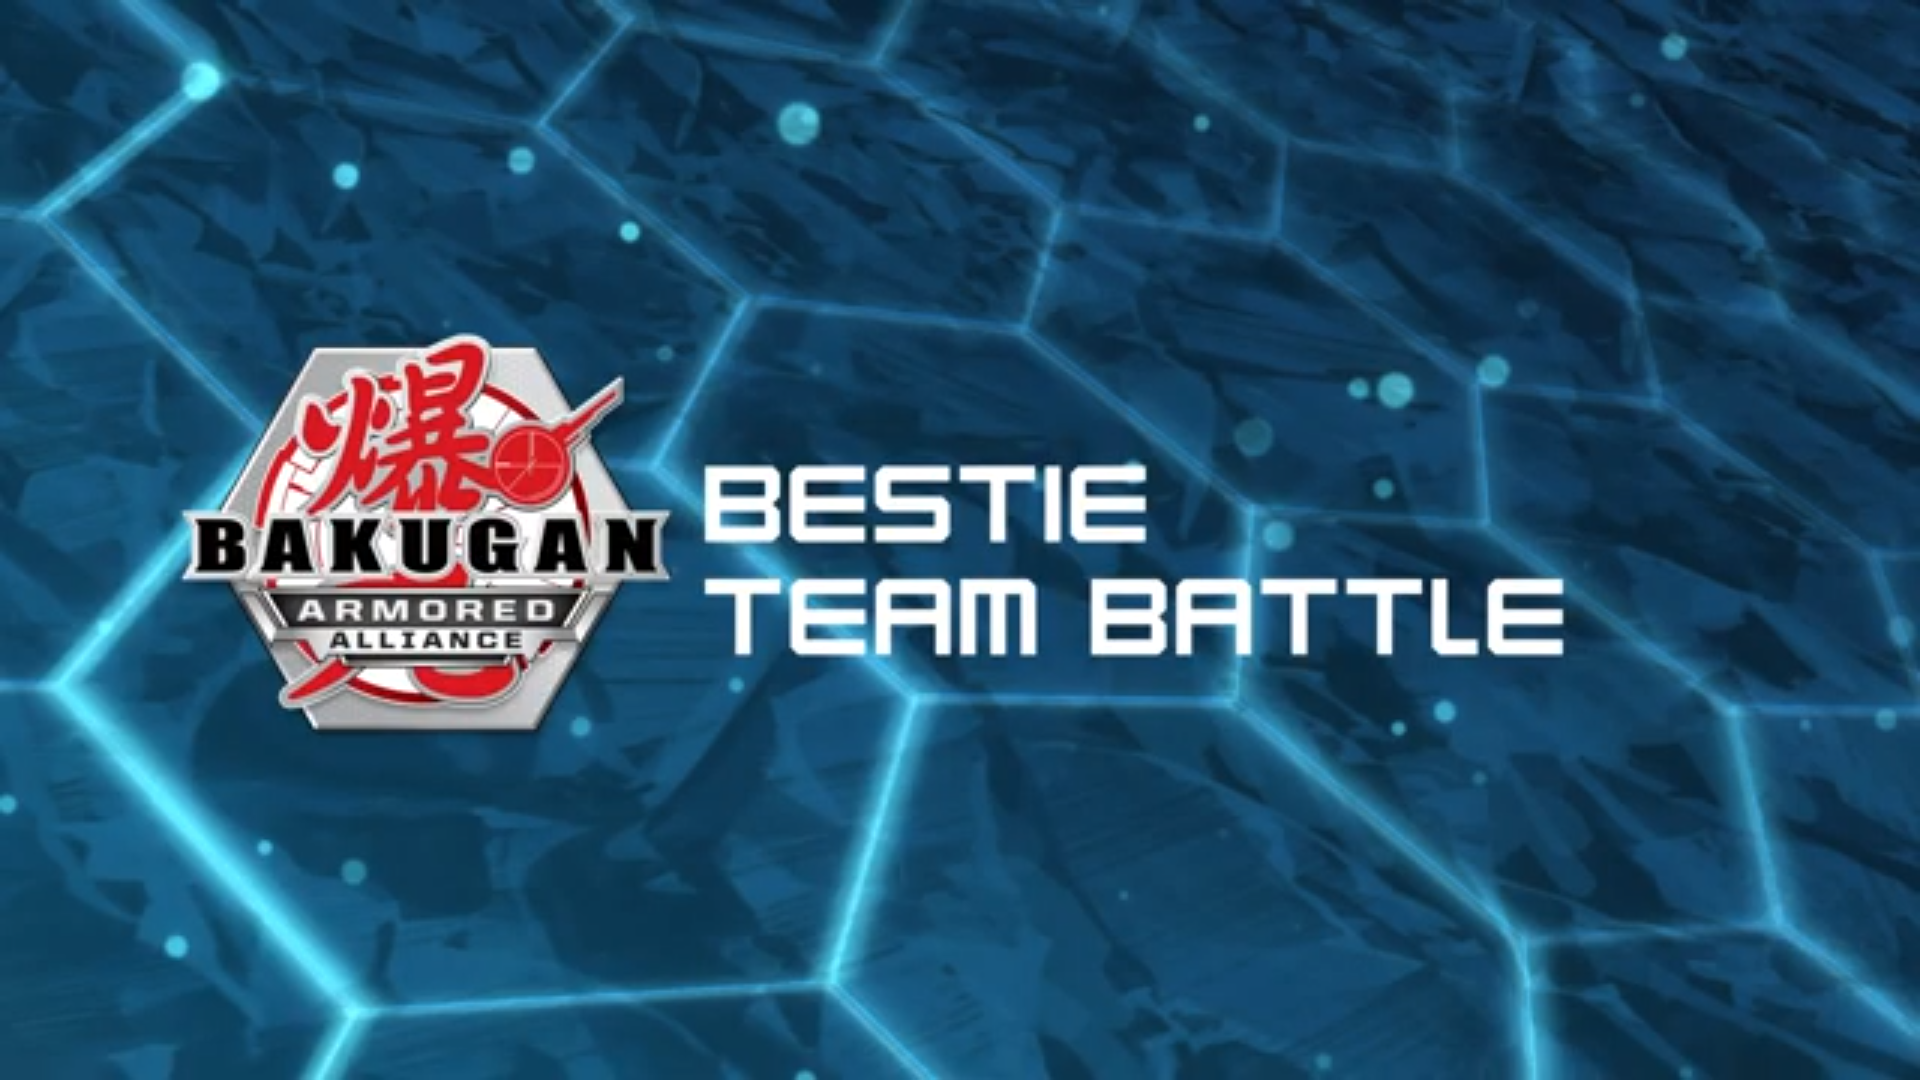 Bakugan in 2023  Bakugan battle brawlers, Miraculous ladybug wallpaper,  Anime